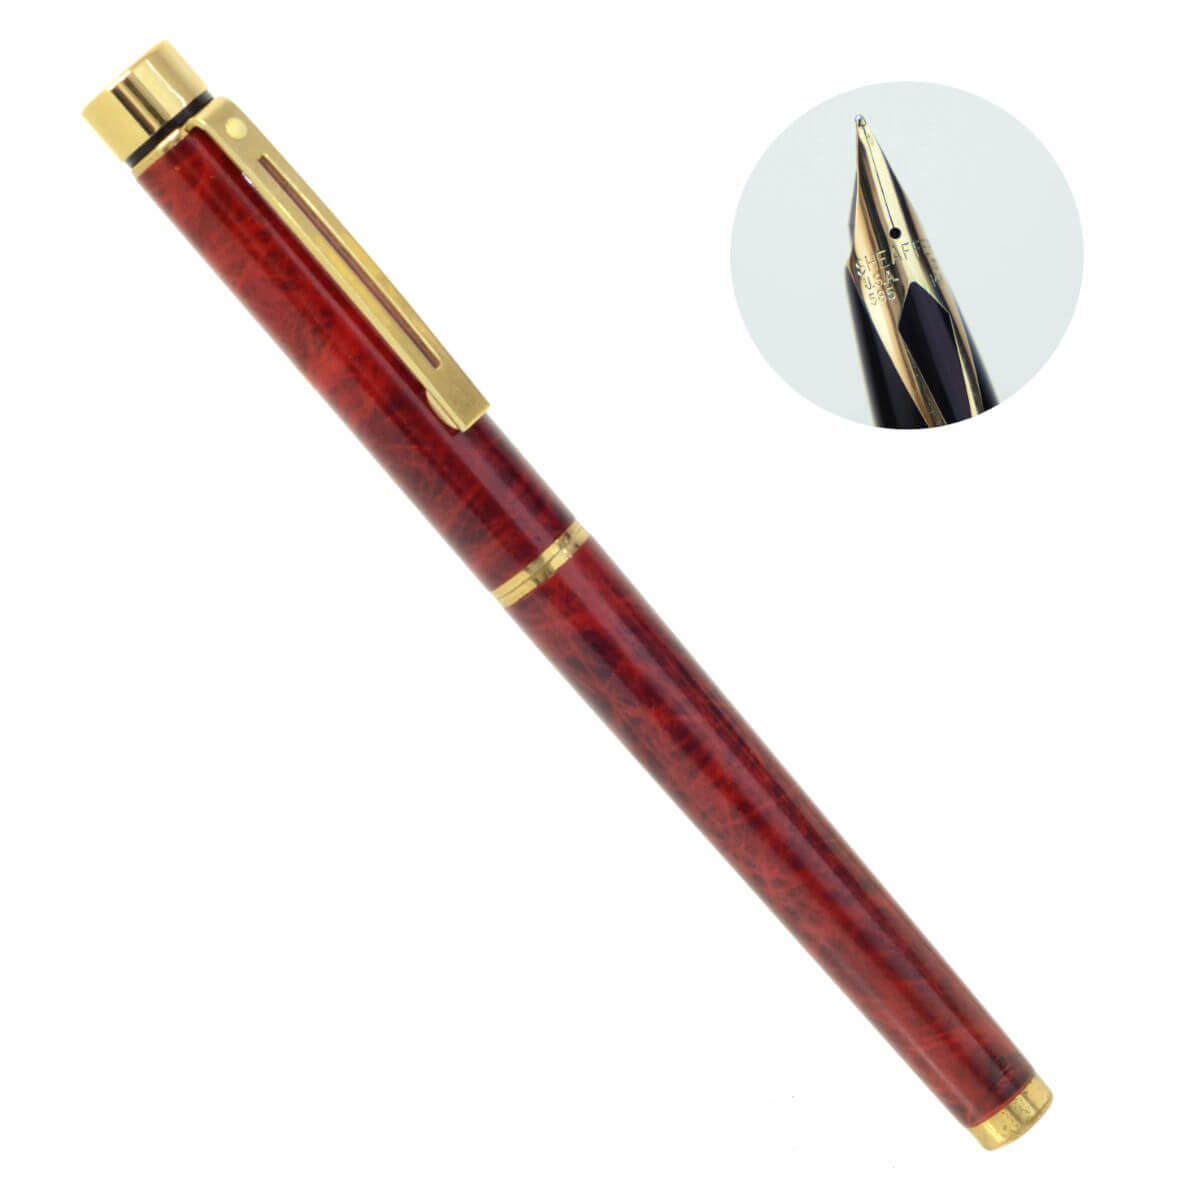 Vintage sheaffer targa 1034 red ronce barrel fountain pen with 14K gold F nib – clean